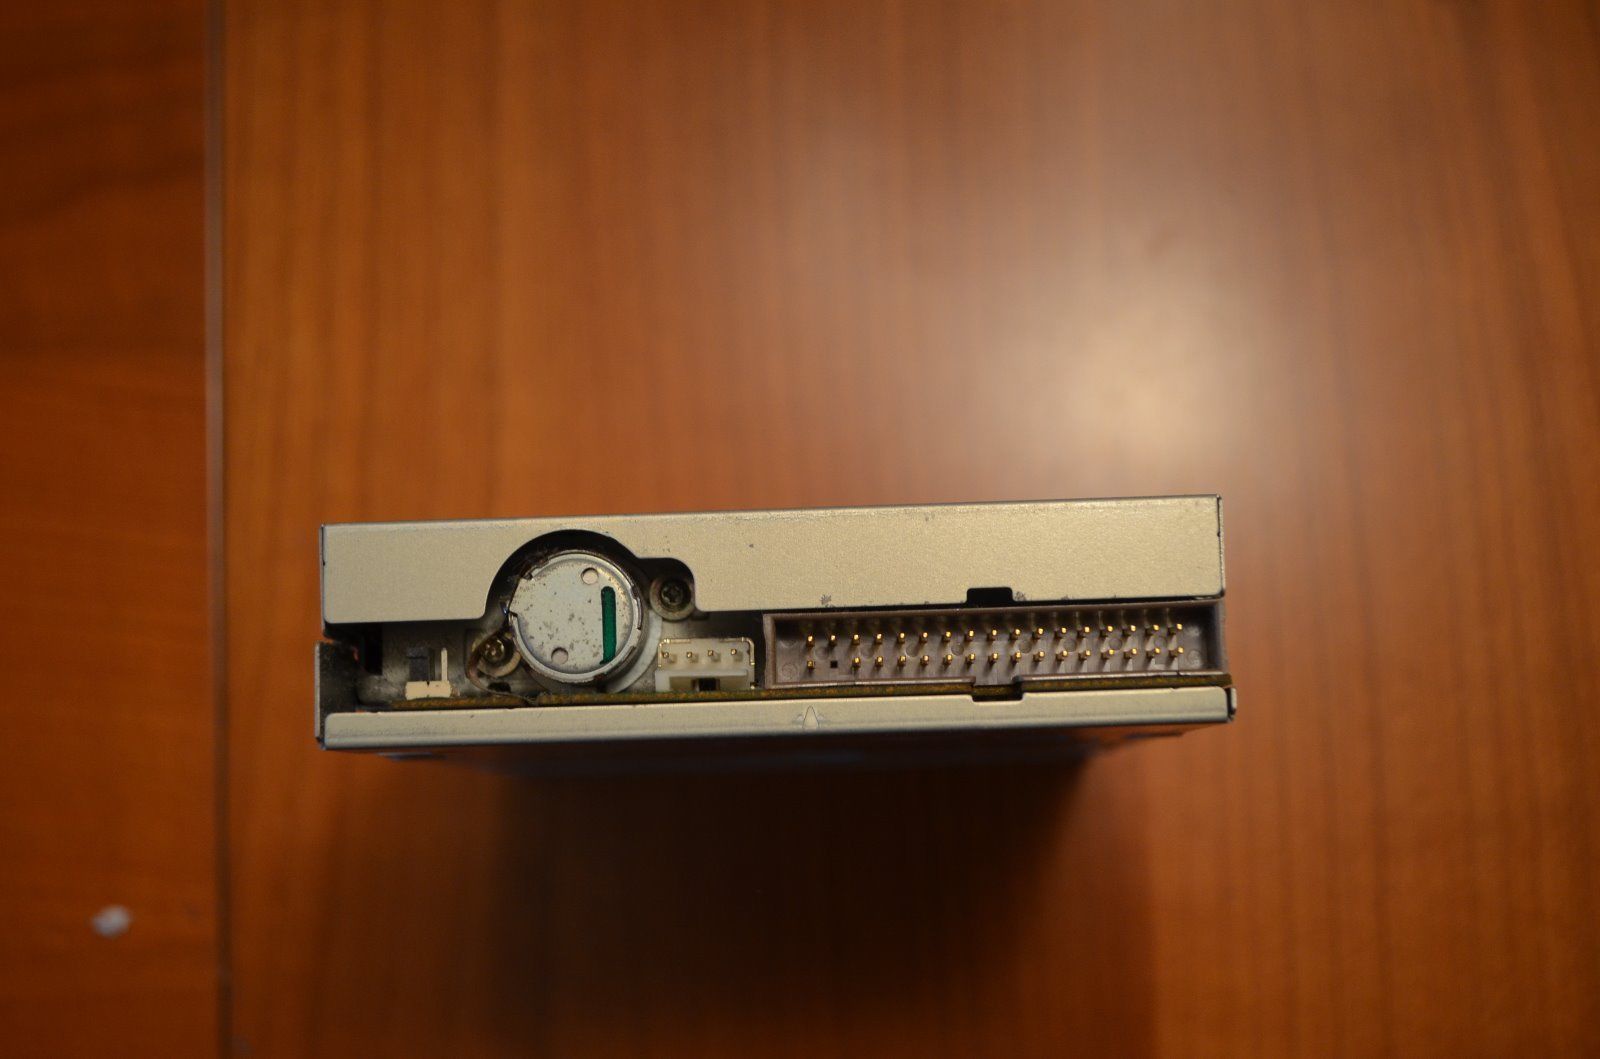 Sony MPF920 Beige floppy drive